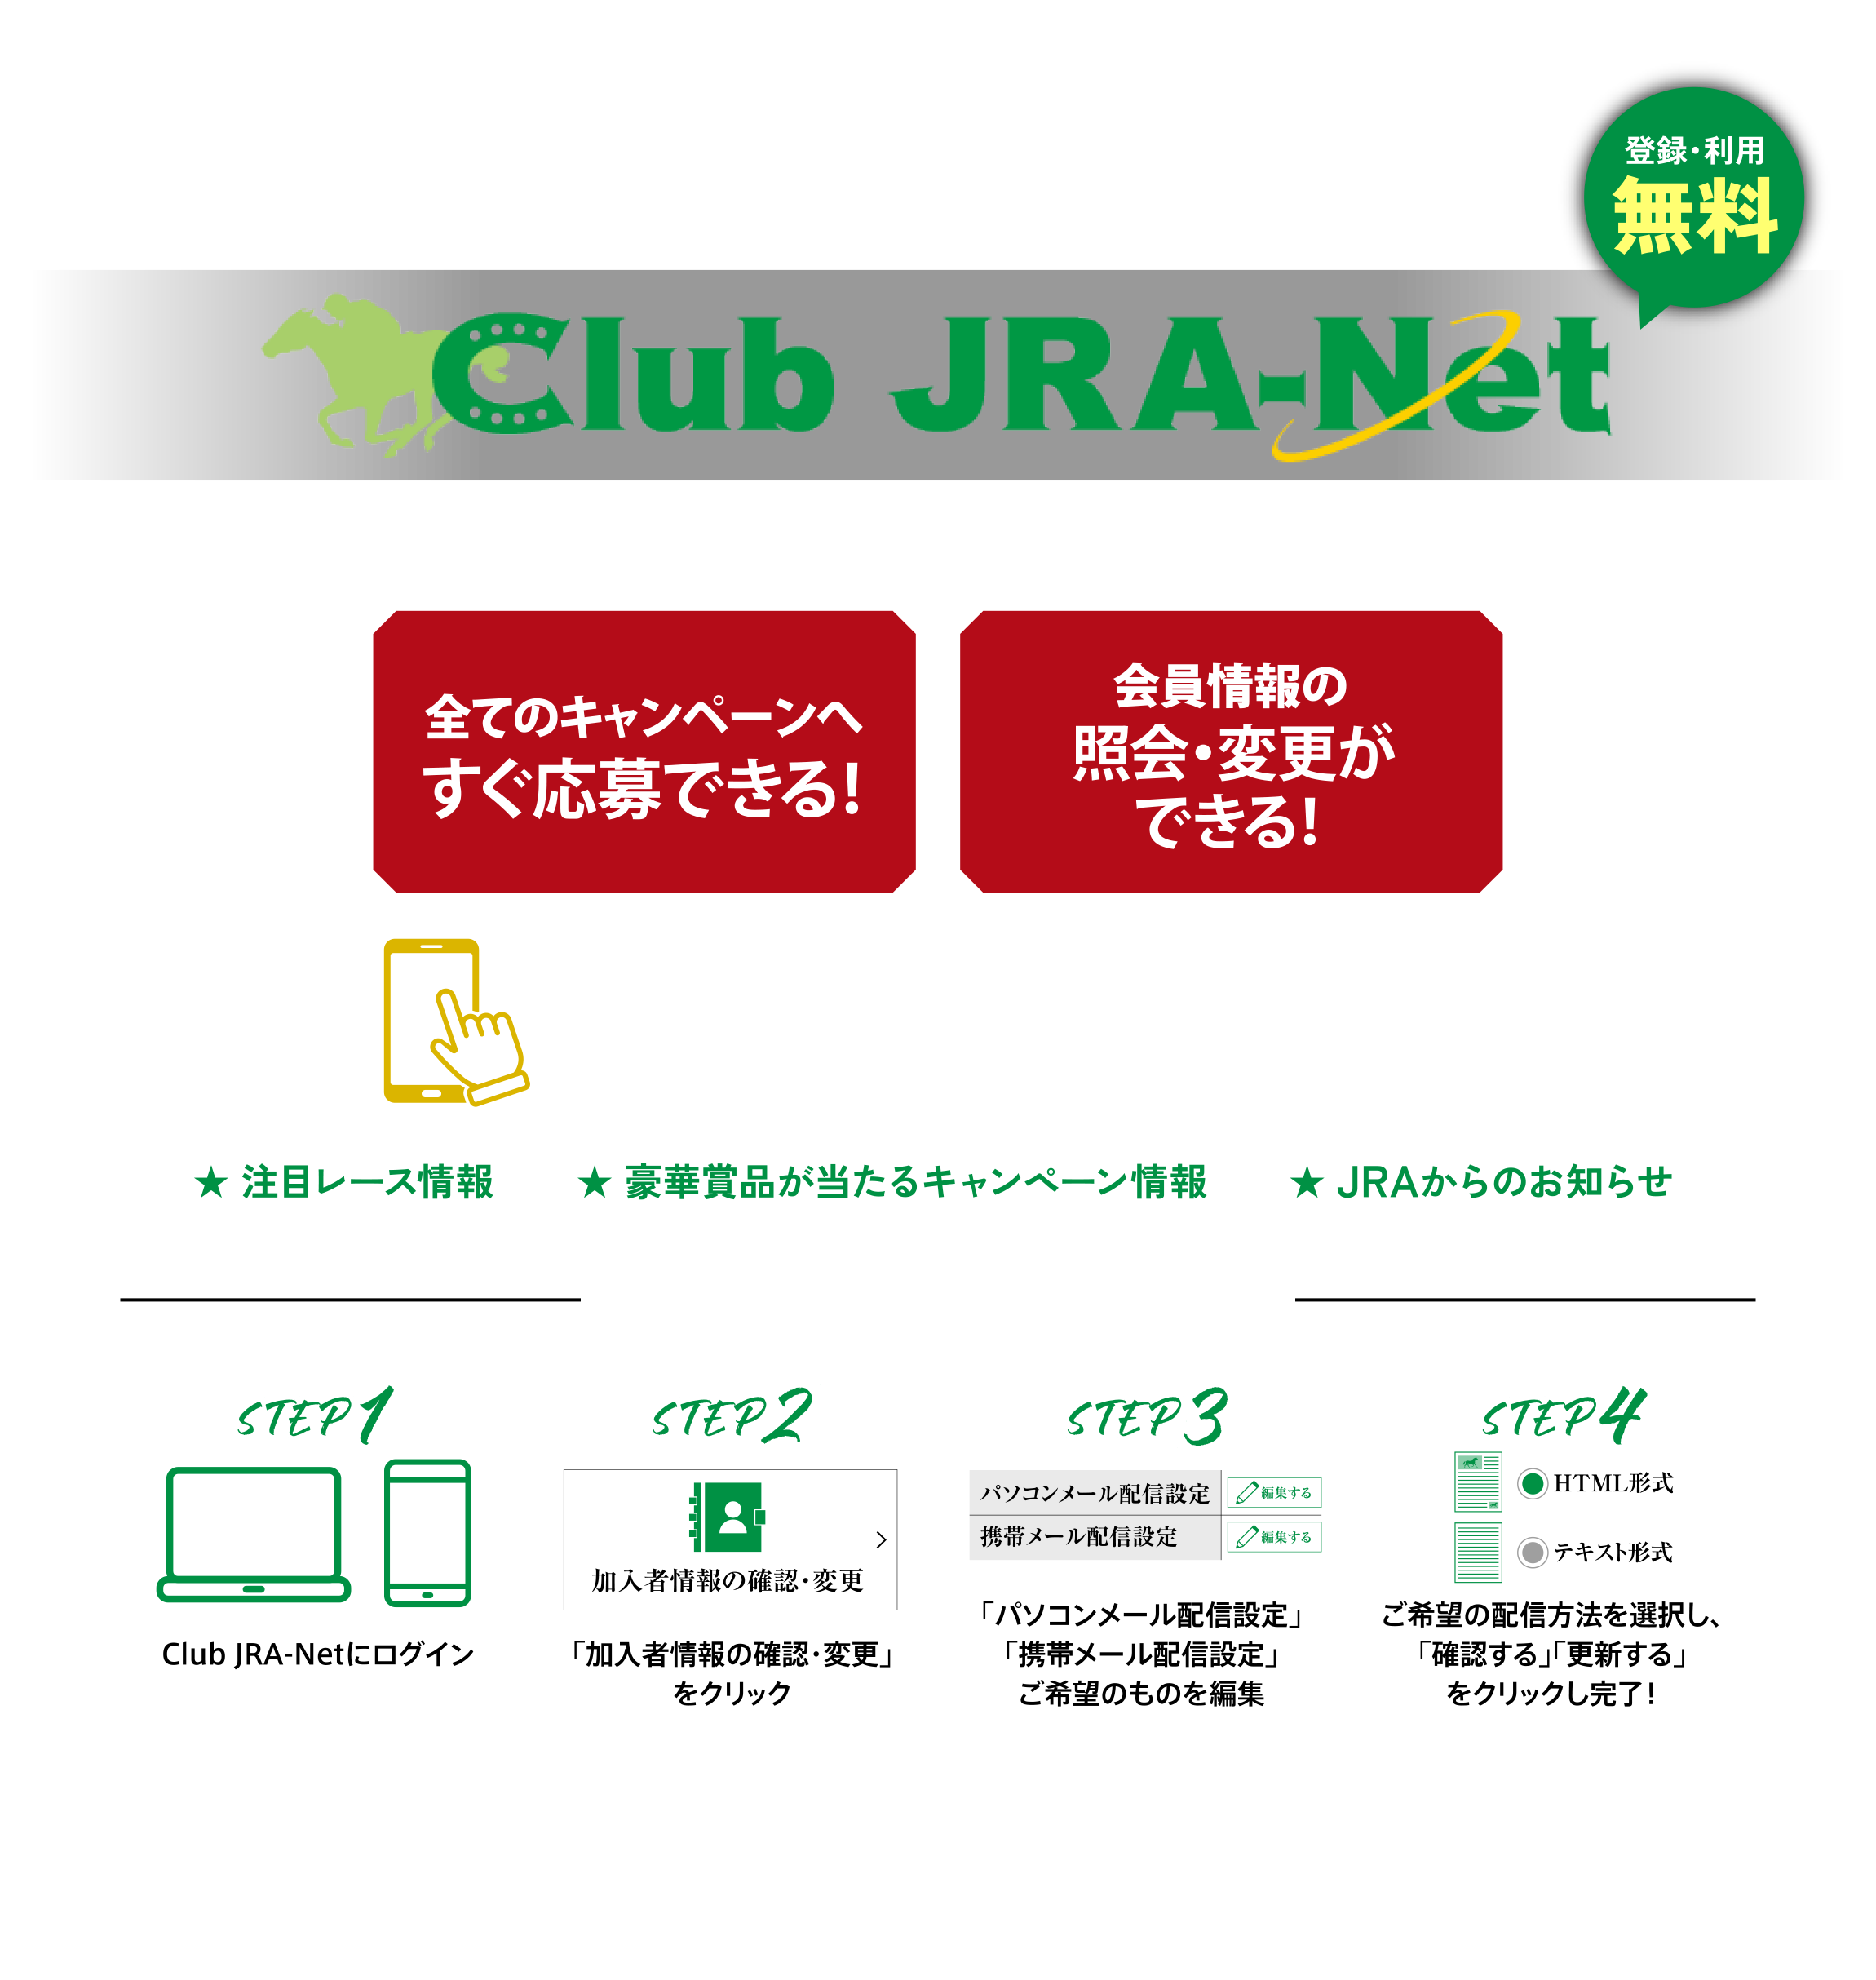 
Club JRA-NetƂ
JRAdbEC^[lbg[p̓o^WebT[rXłB
o^Ep
JRAdbEC^[lbg[T|[g܂

SẴLy[ւłI
̏ƉEύXłI

Club JRA-NetʐM̂o^ōŐV͂I
ڃ[X
؏ܕiLy[
JRÂm点

}KuClub JRA-NetʐMvMݒ@
STEP 1
Club JRA-NetɃOC
STEP 2
ҏ̊mFEύX
uҏ̊mFEύXvNbN
STEP 3
up\R[zMݒv
ugу[zMݒv
]̂̂ҏW
STEP 4
]̔zM@IAumFvuXVvNbNI
